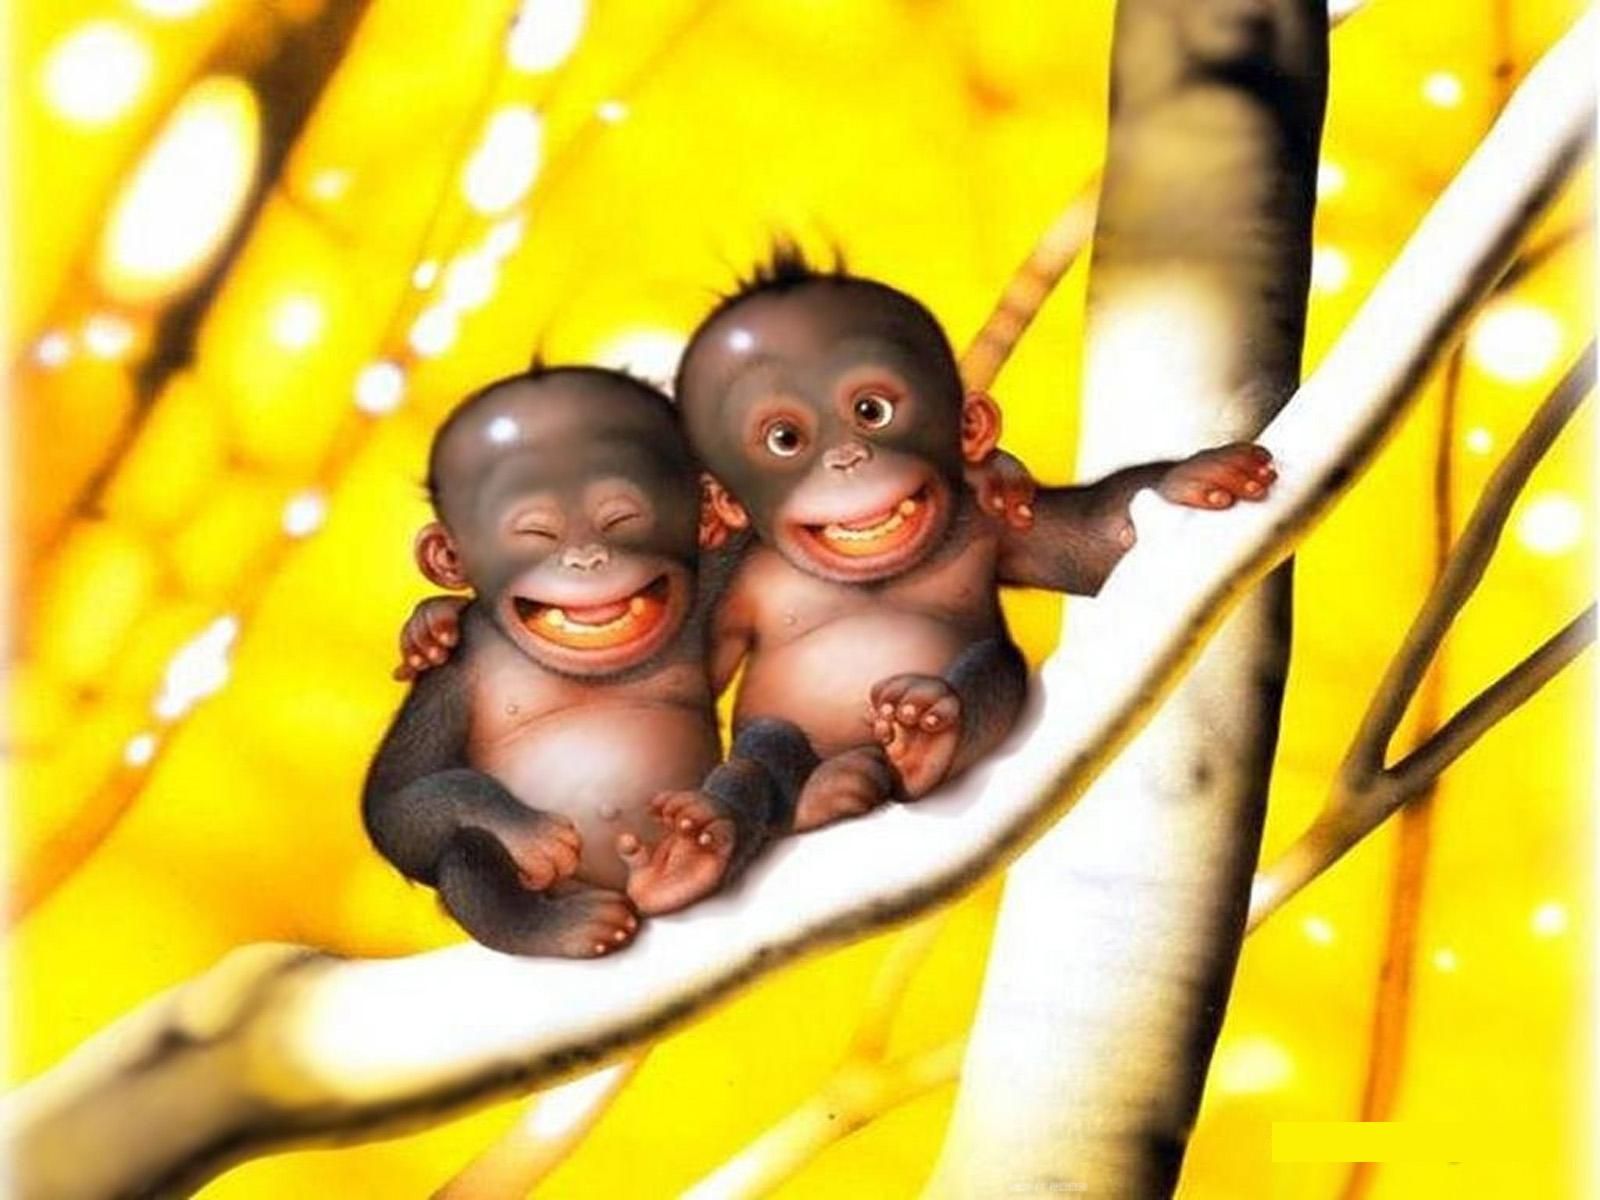 Funny HD wallpaper Wallpaper. Funny monkey picture, Monkeys funny, Monkey picture